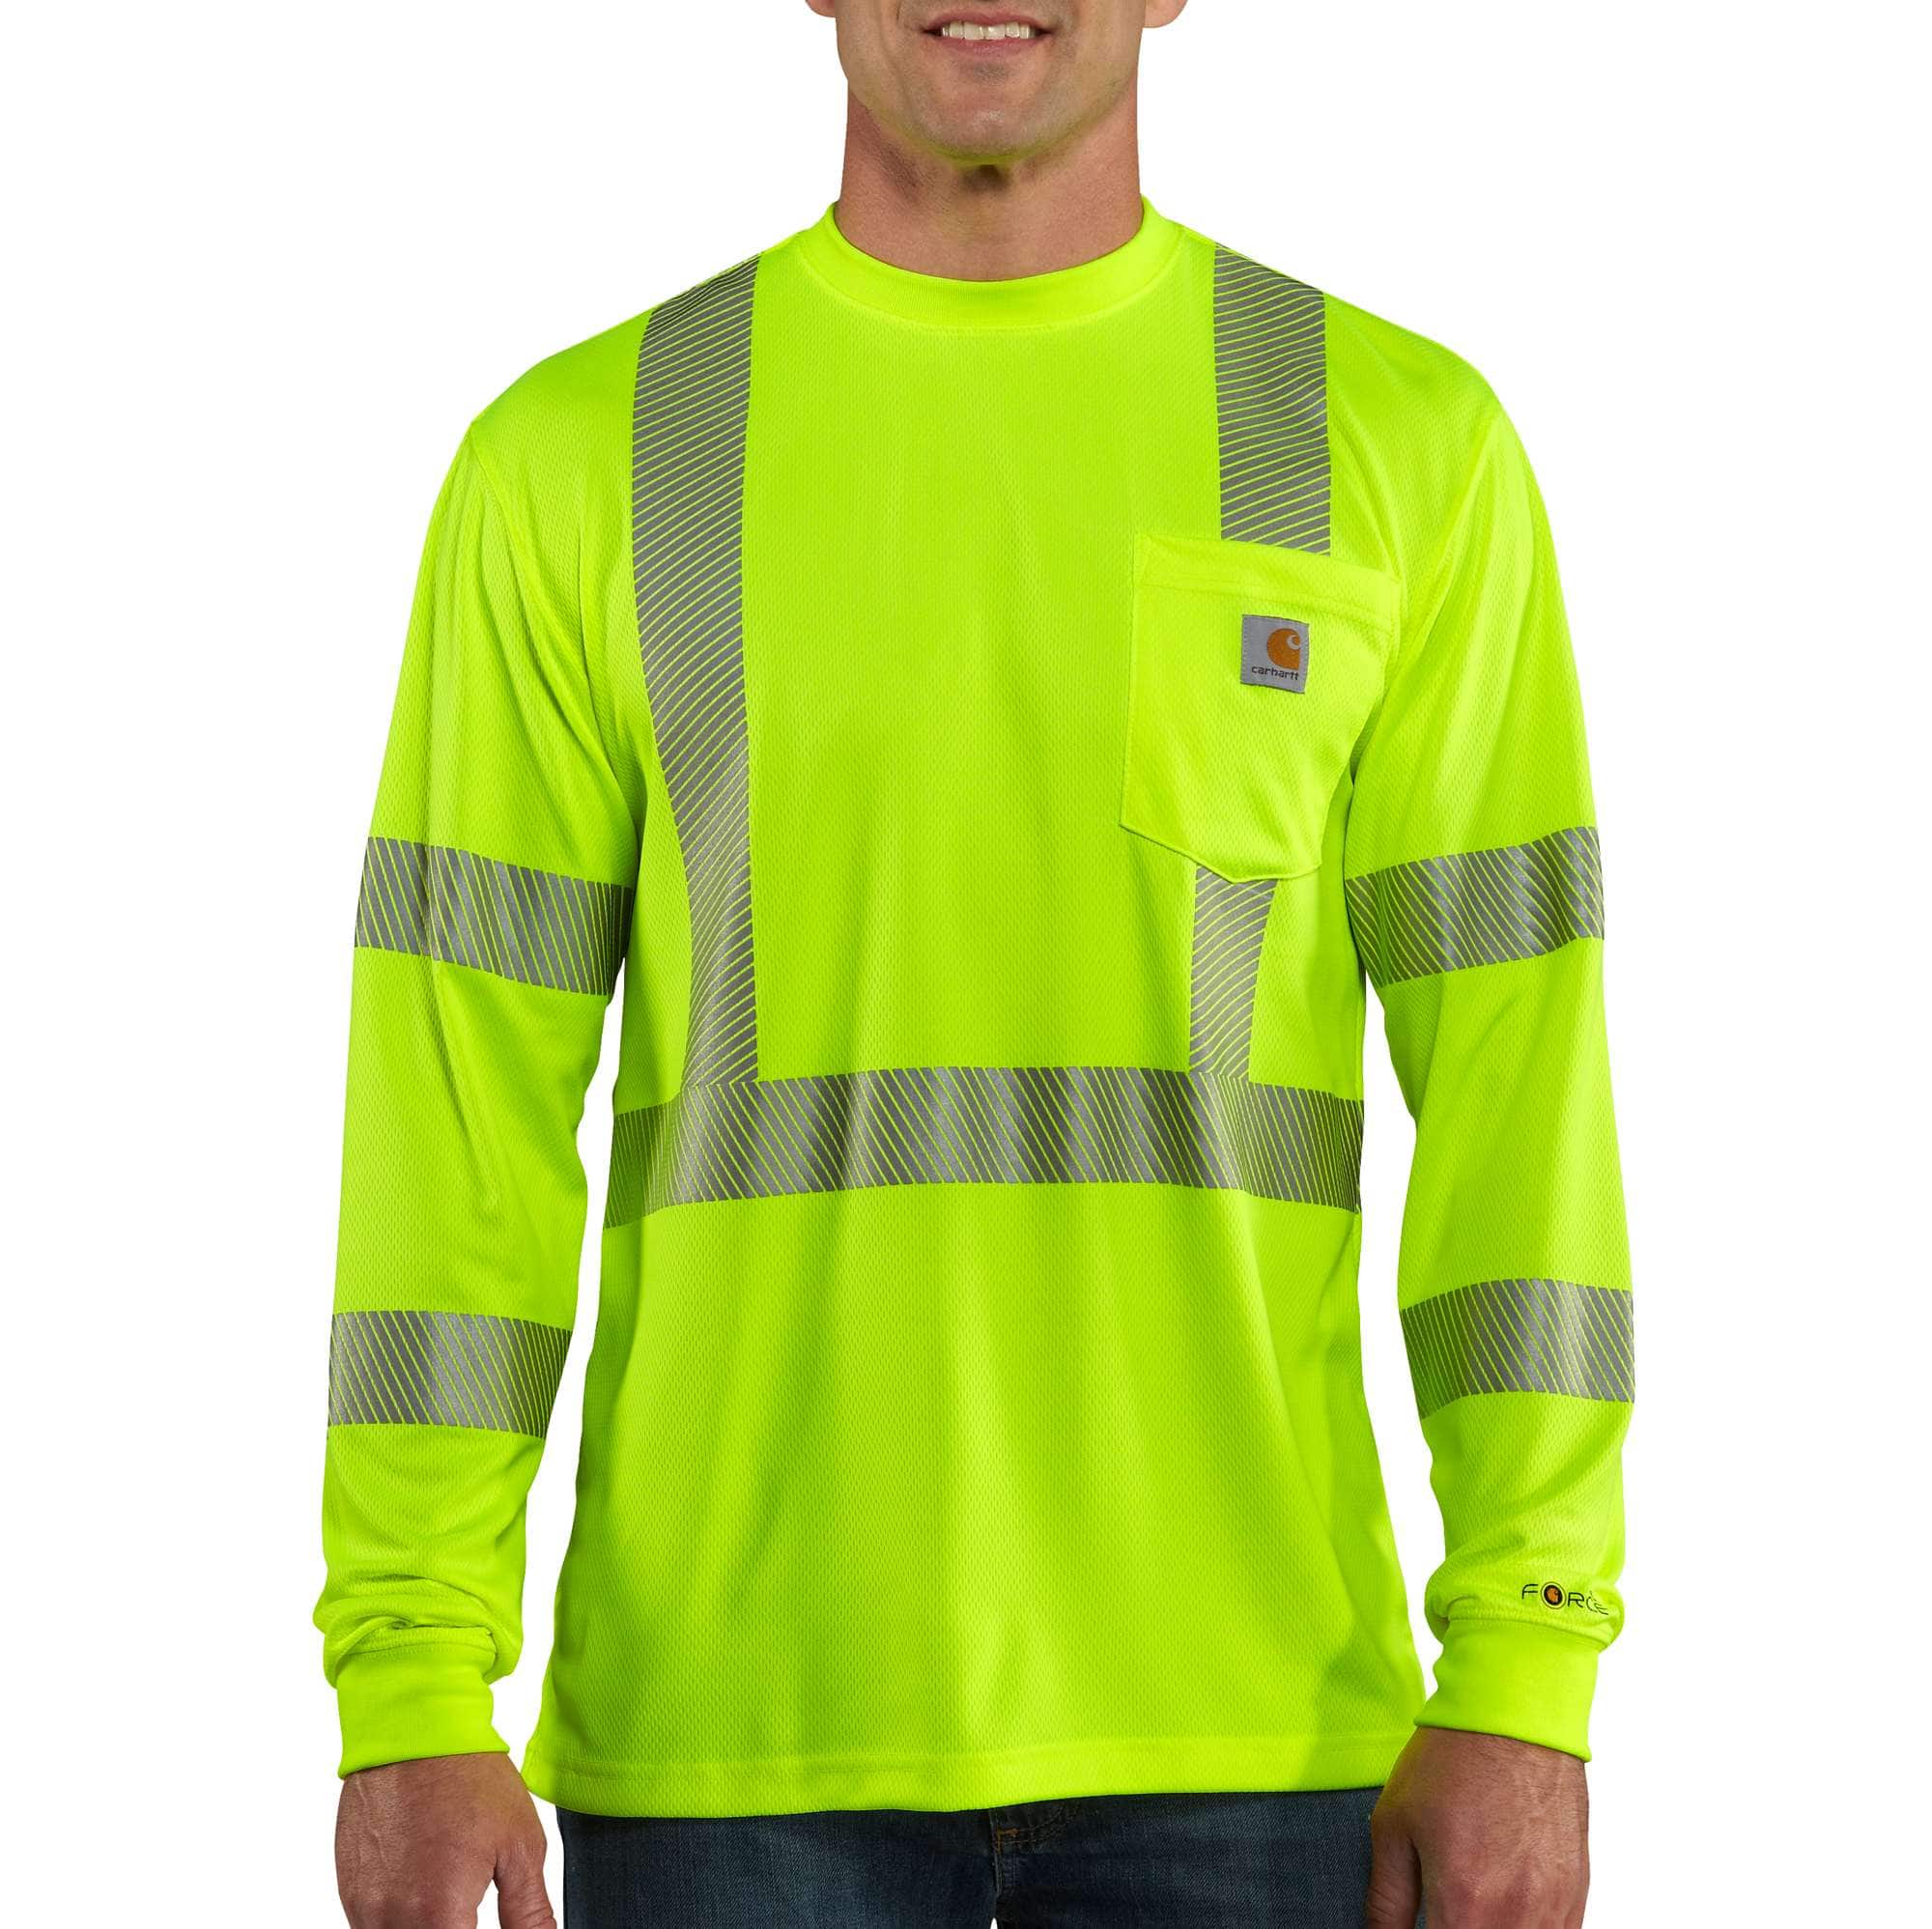 Force® High-Visibility Long-Sleeve Class 3 T-Shirt Carhartt Company Gear